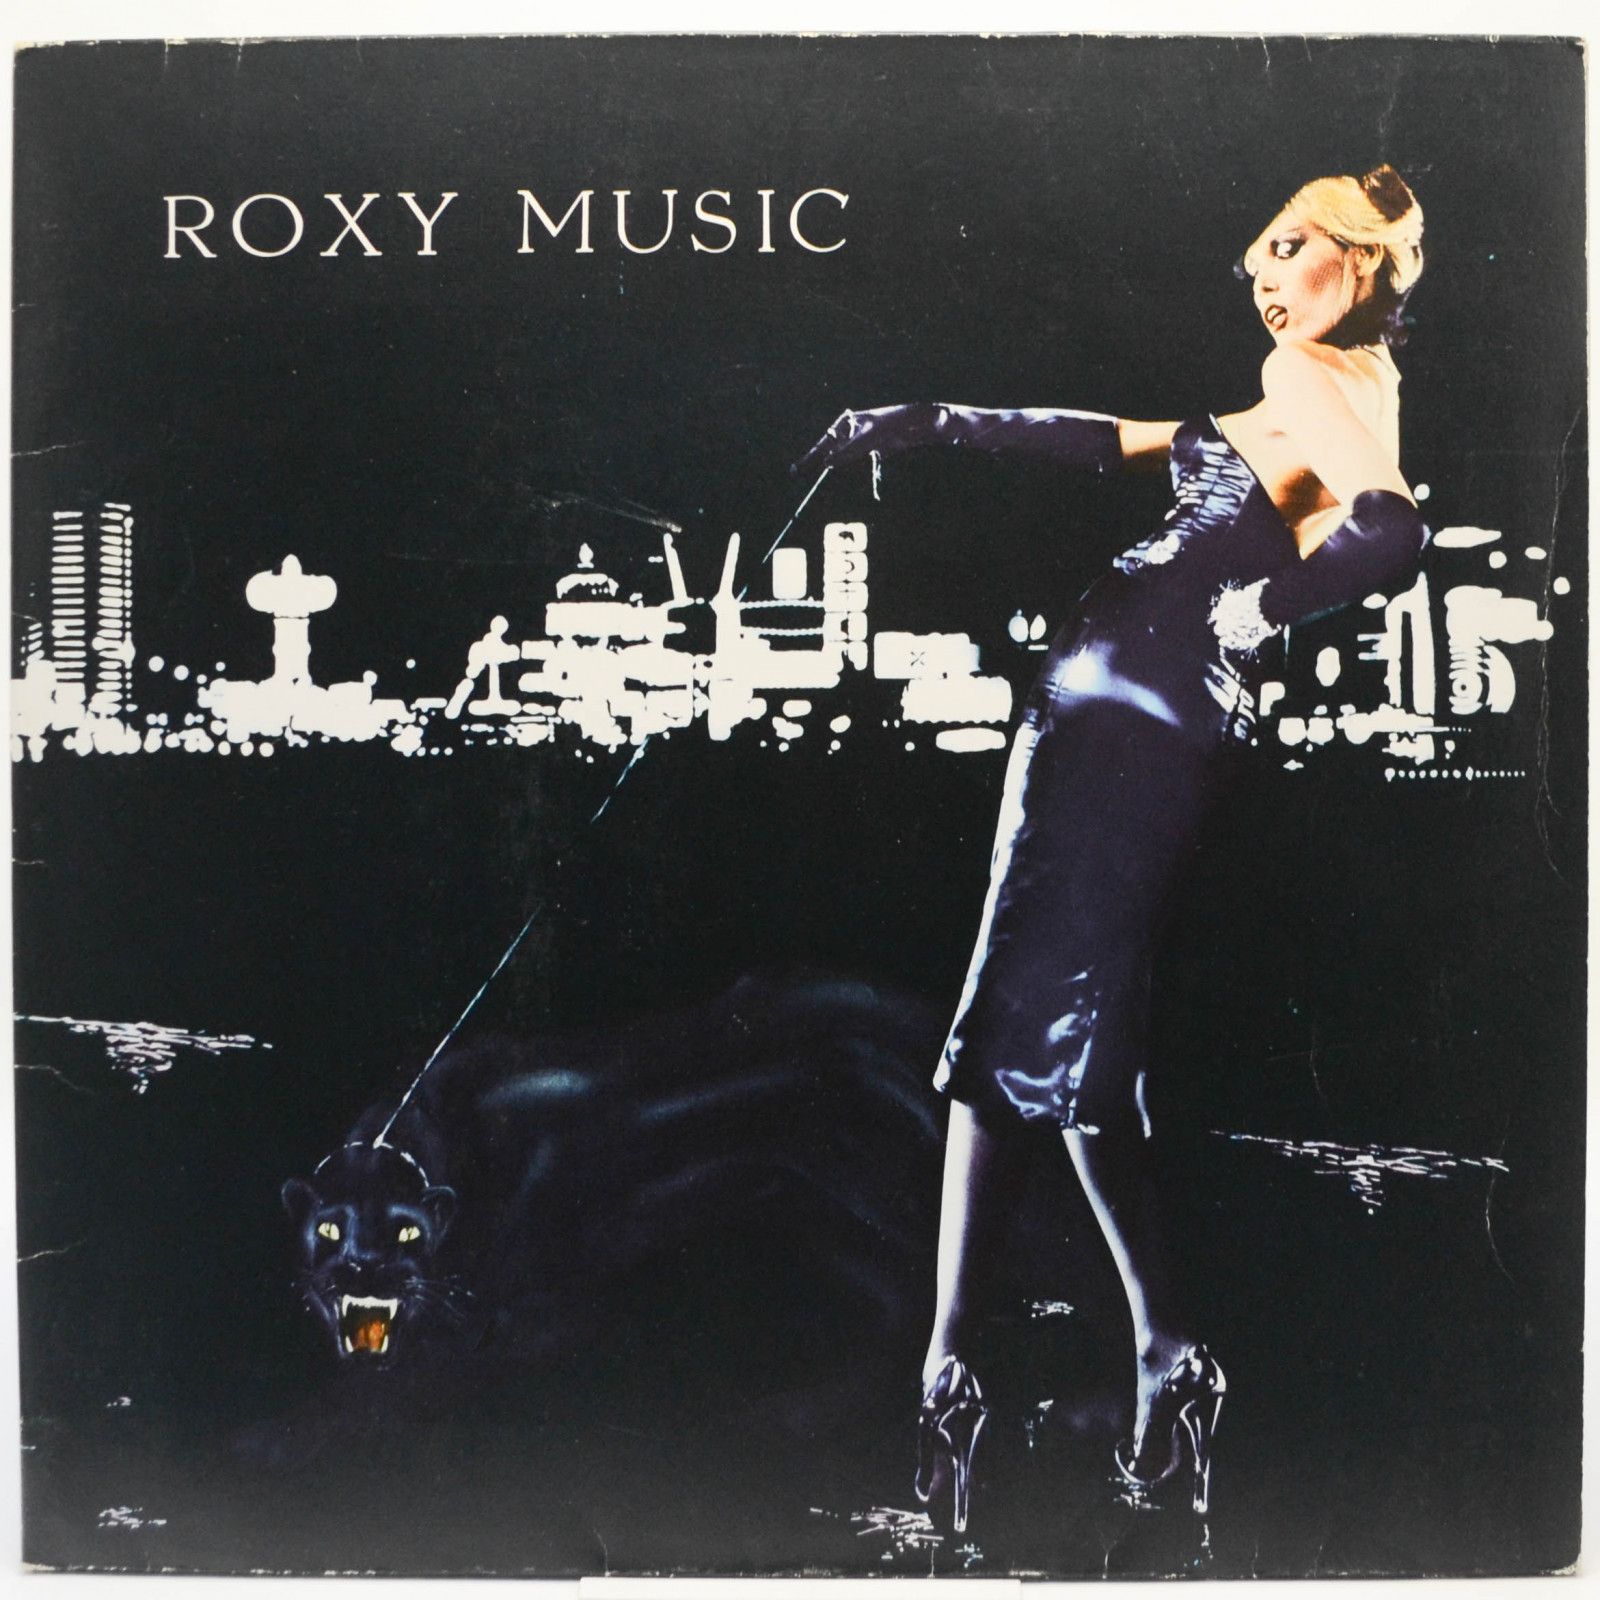 Roxy Music — For Your Pleasure, 1973